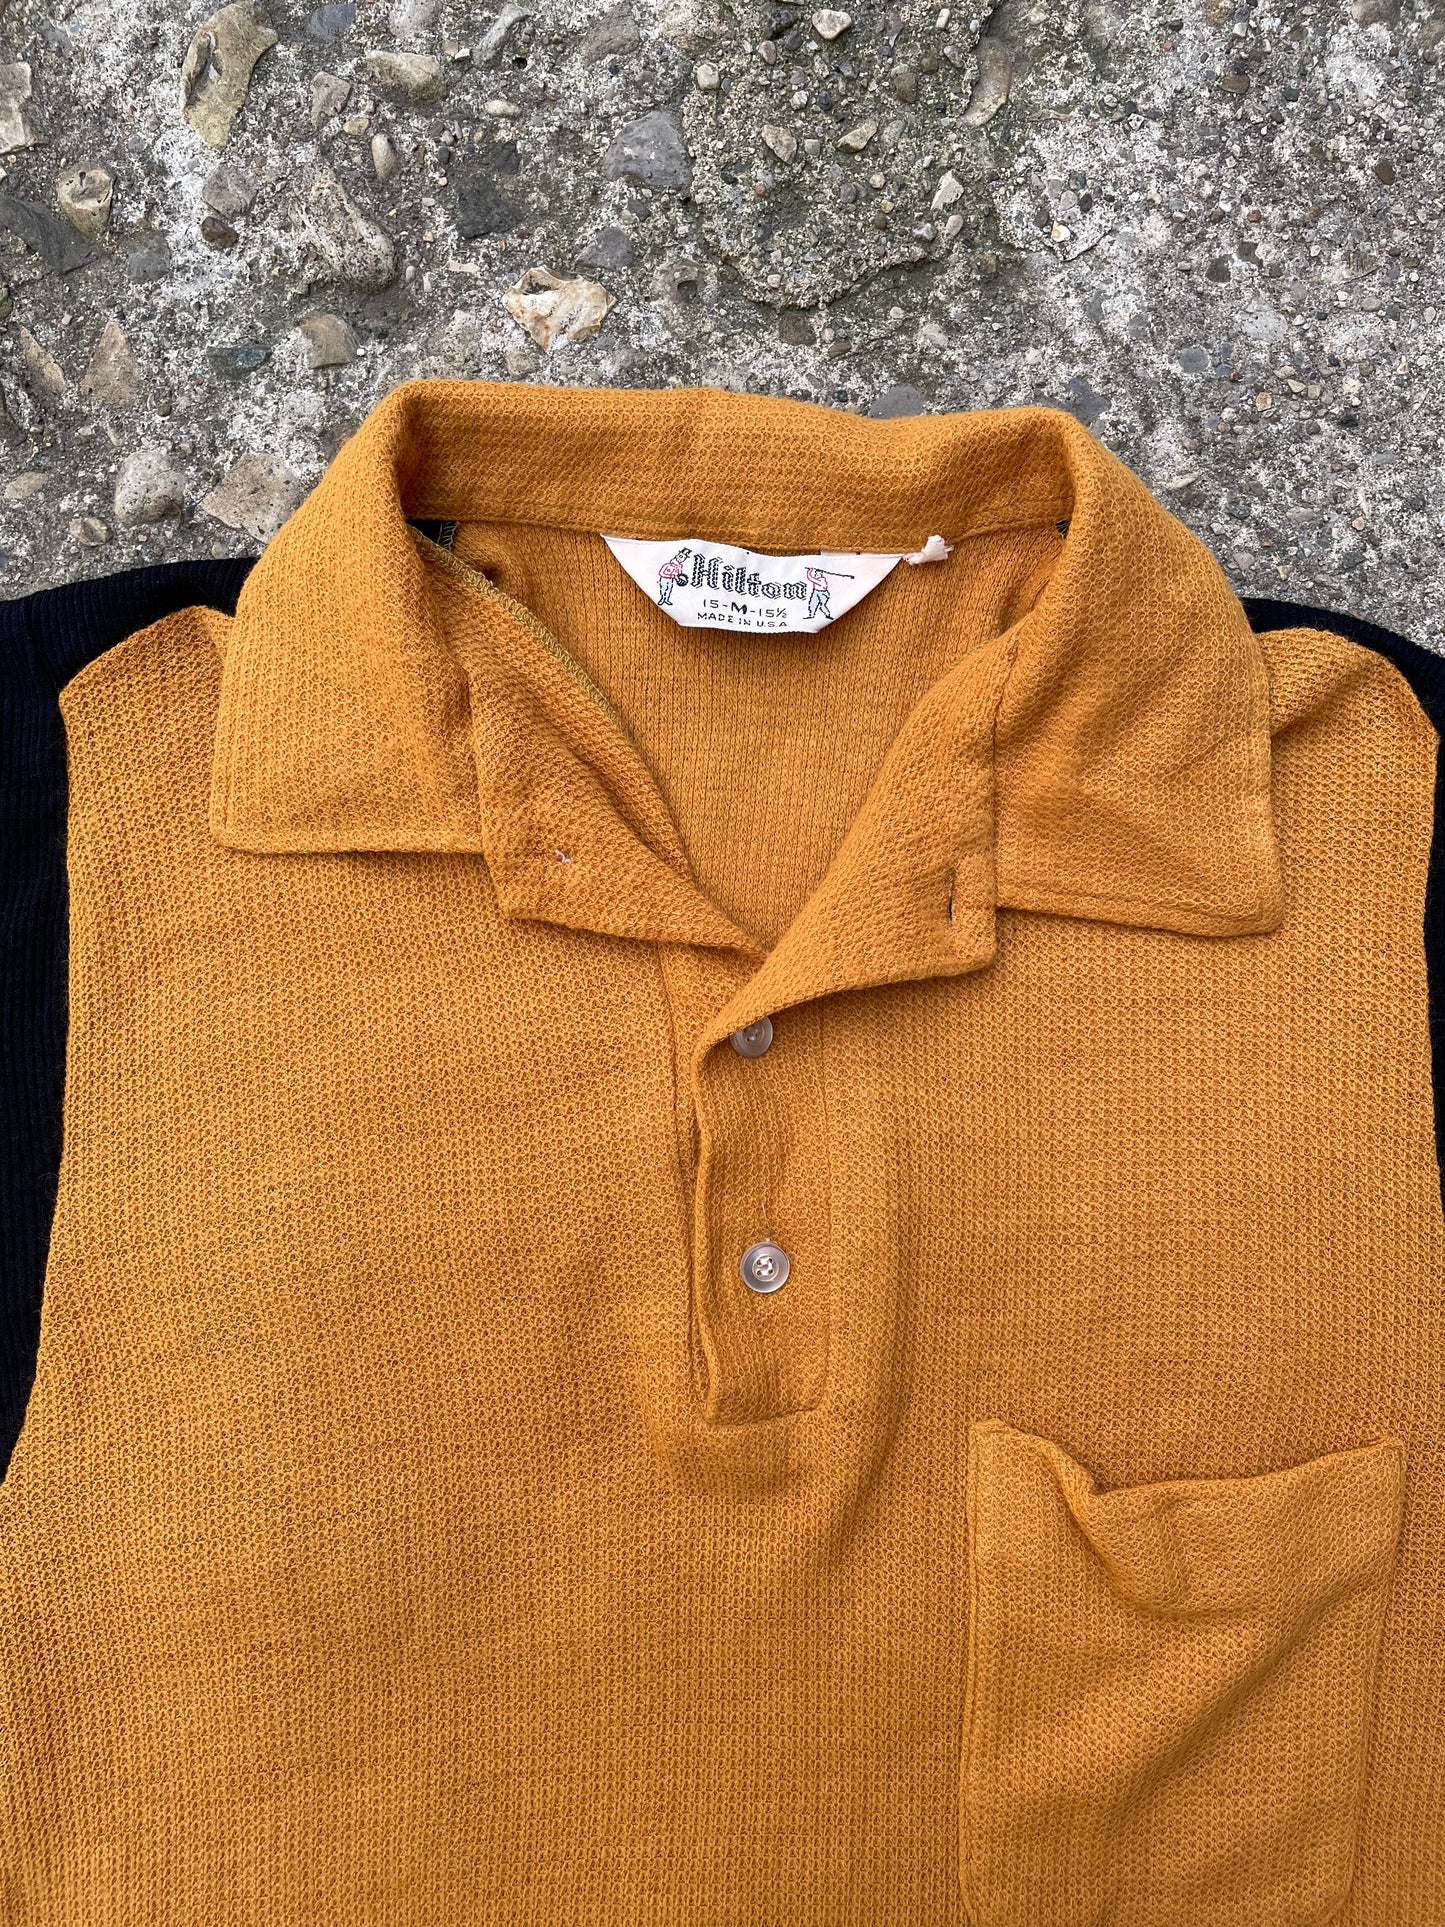 1950's Hilton Chain Stitched Polo Bowling Shirt - M